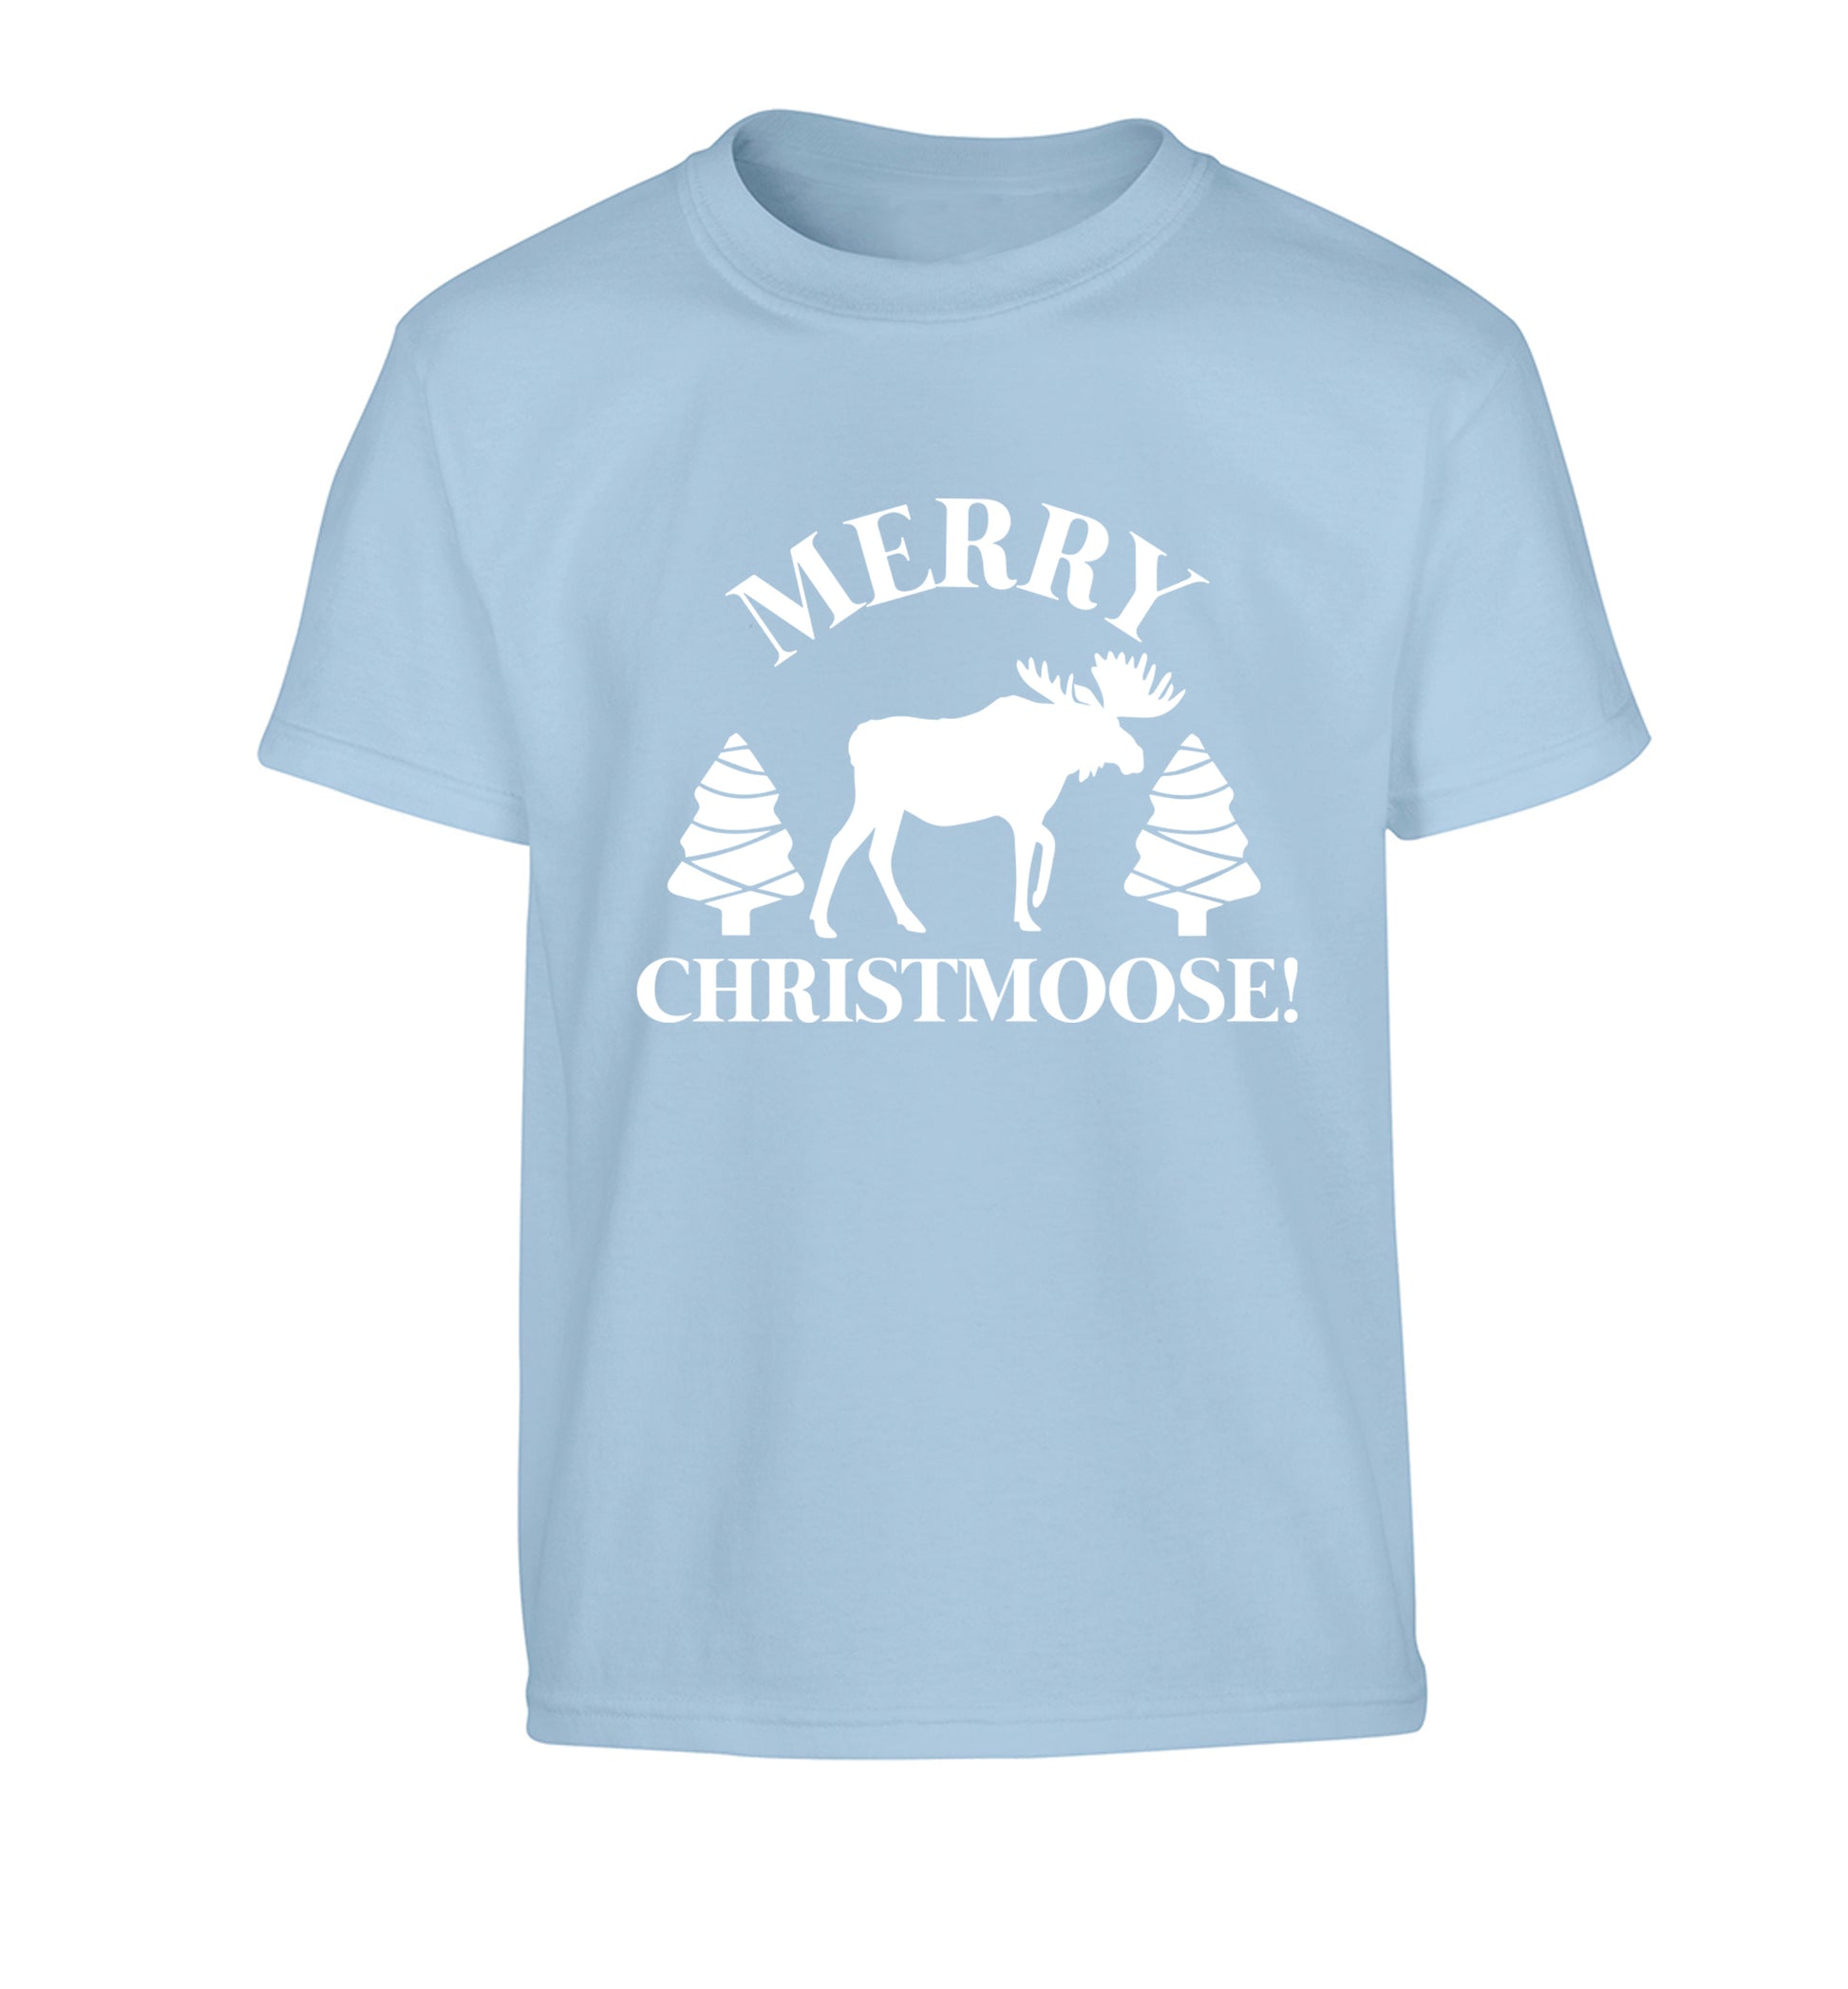 Merry Christmoose Children's light blue Tshirt 12-14 Years